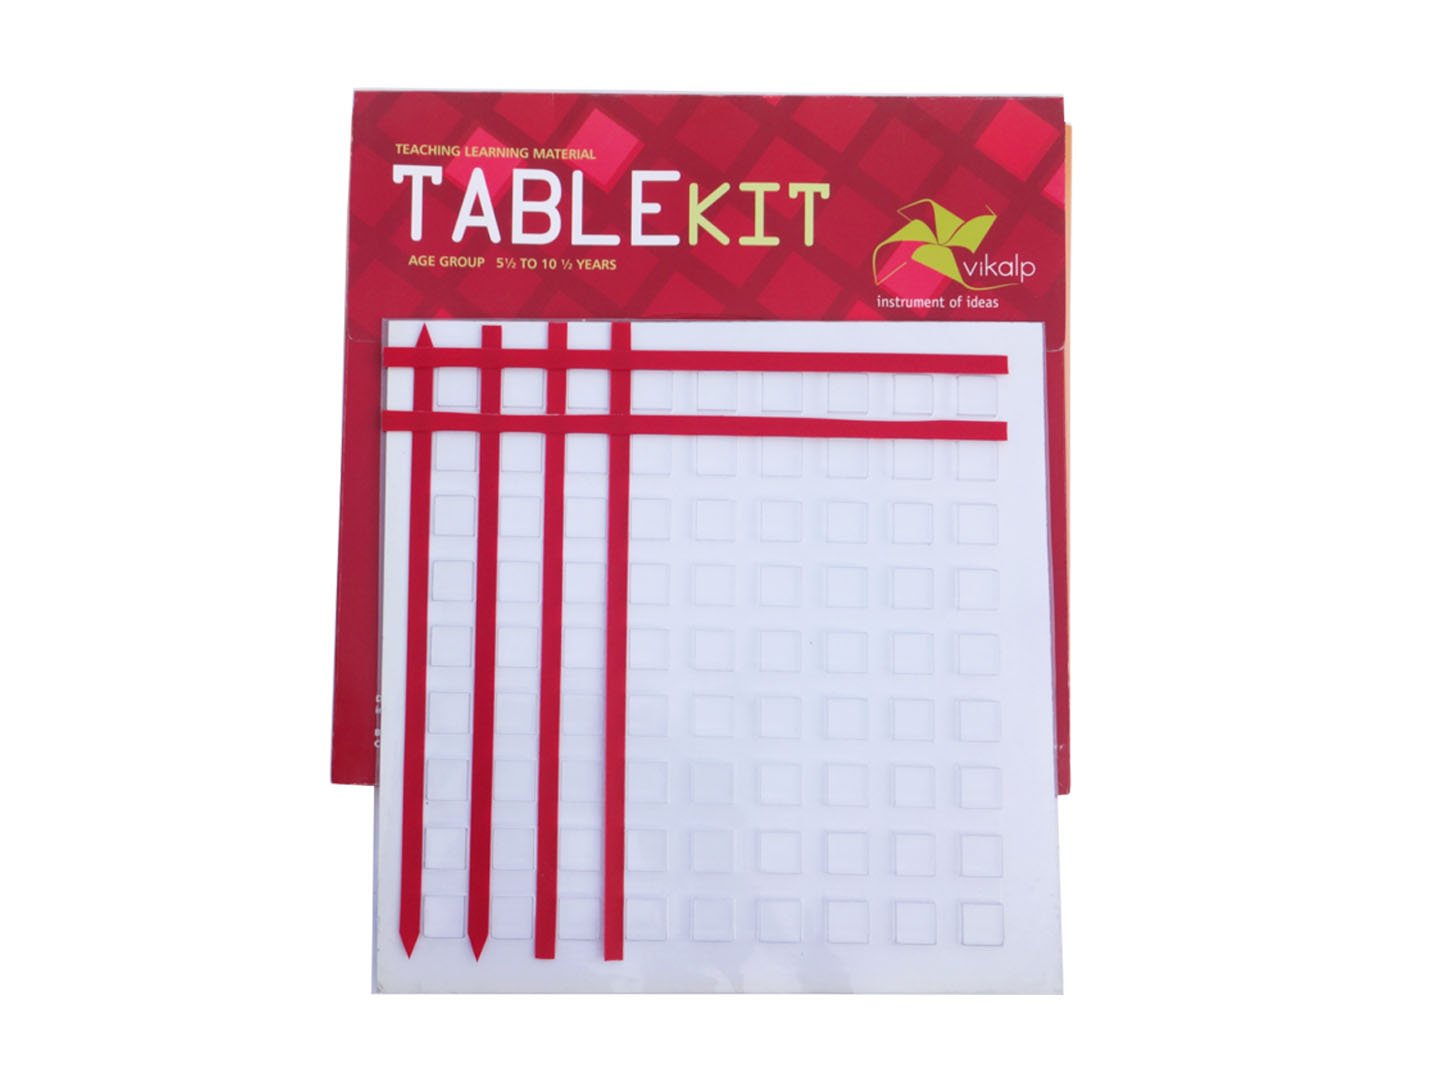 Table Kit